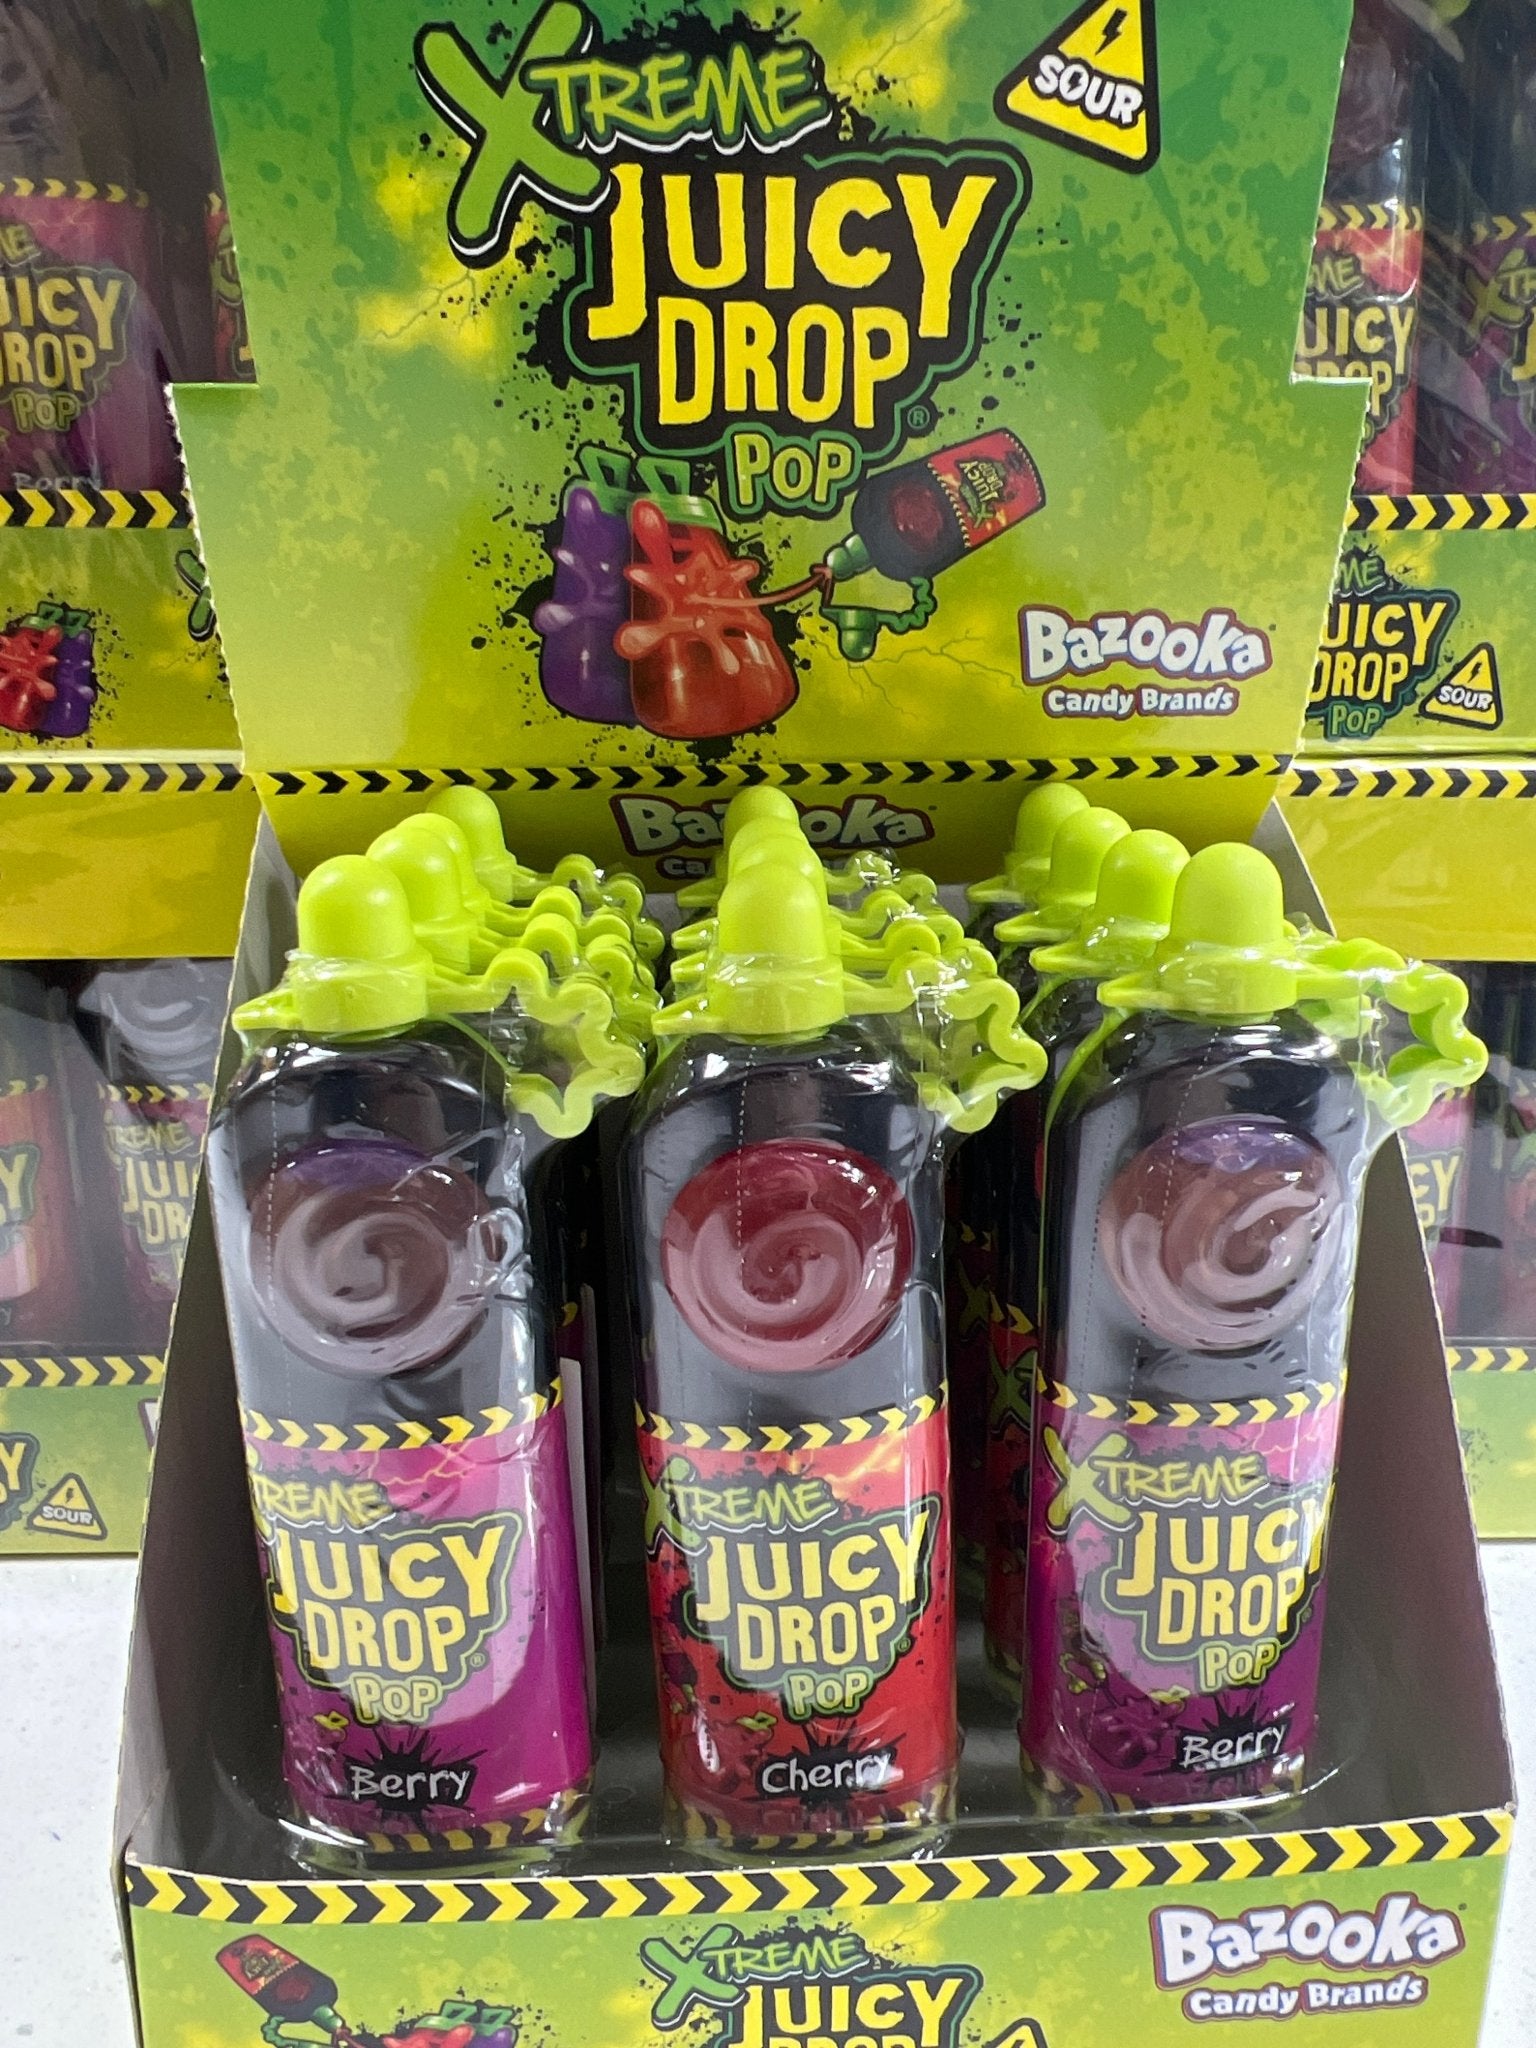 Xtreme juicy drop pop - Dream Candy